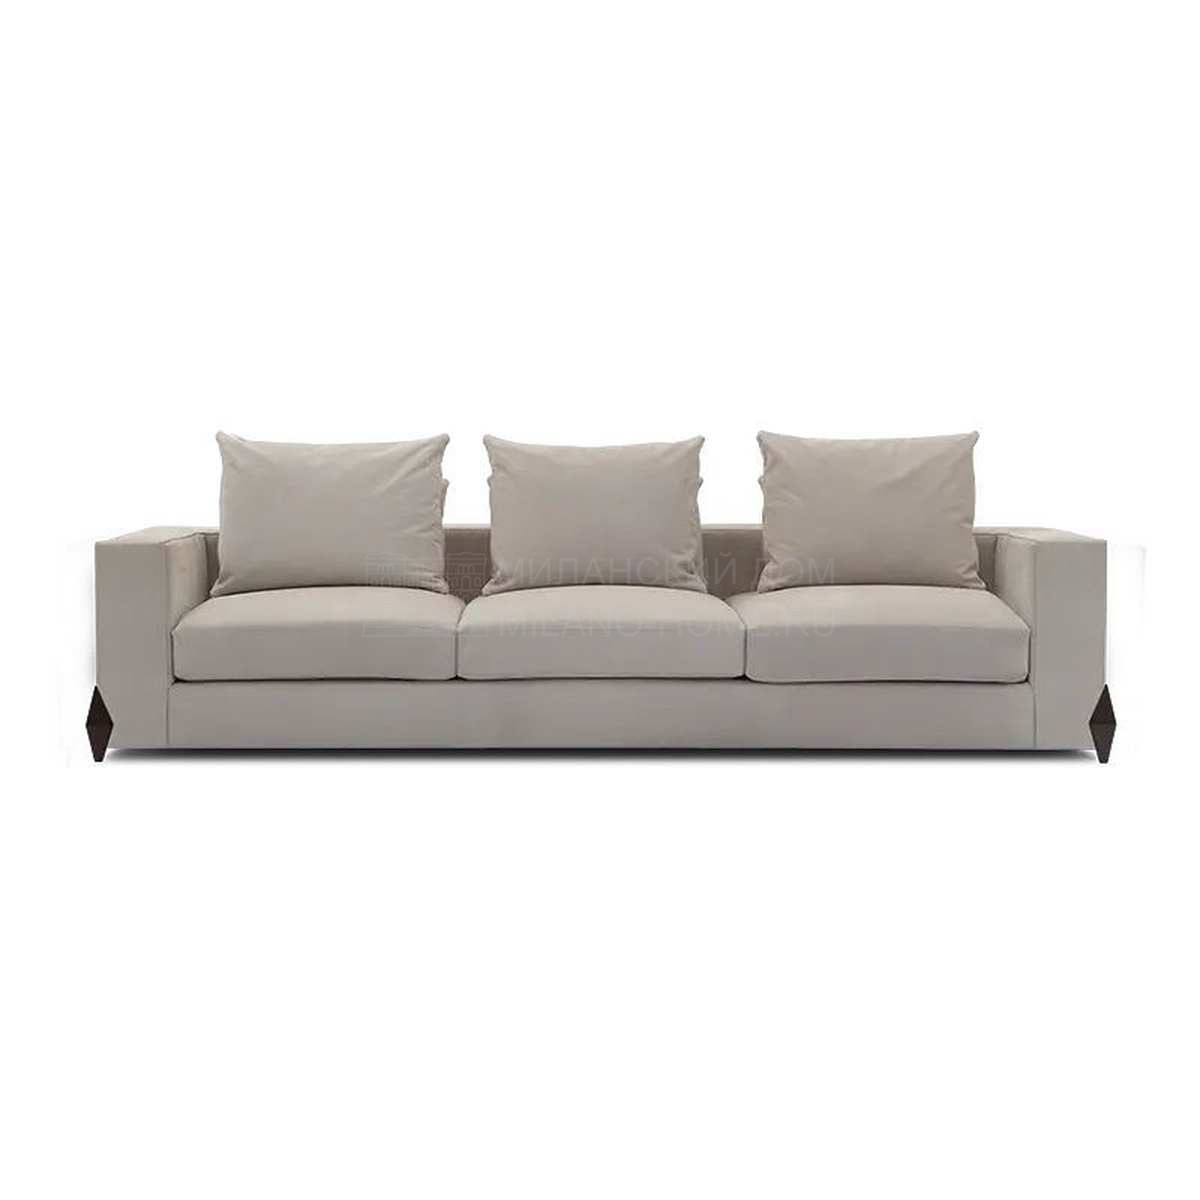 Прямой диван Ponti sofa  из США фабрики CHRISTOPHER GUY